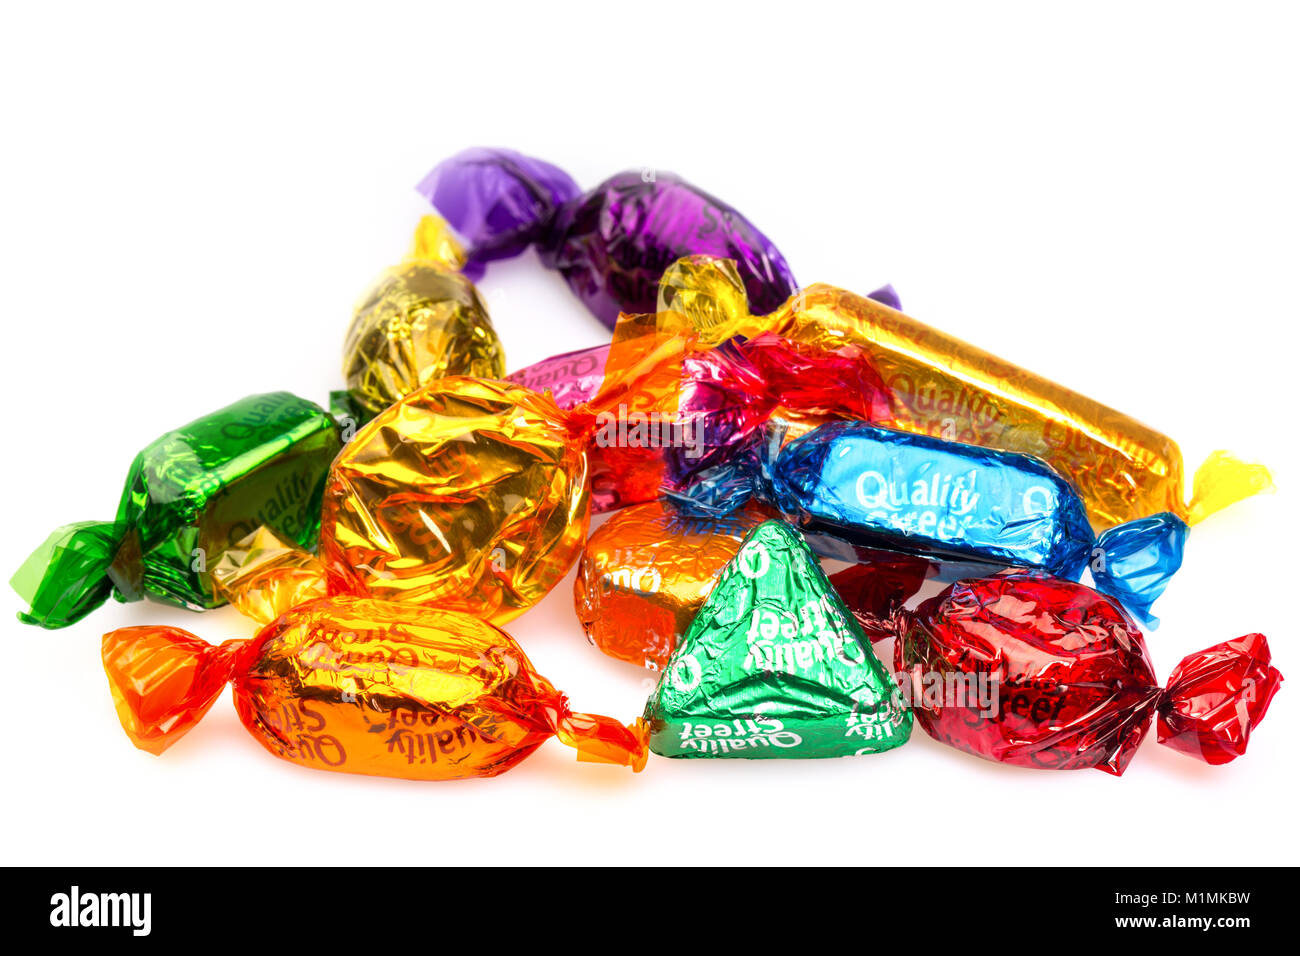 Quality Street chocolates on a white background Stock Photo